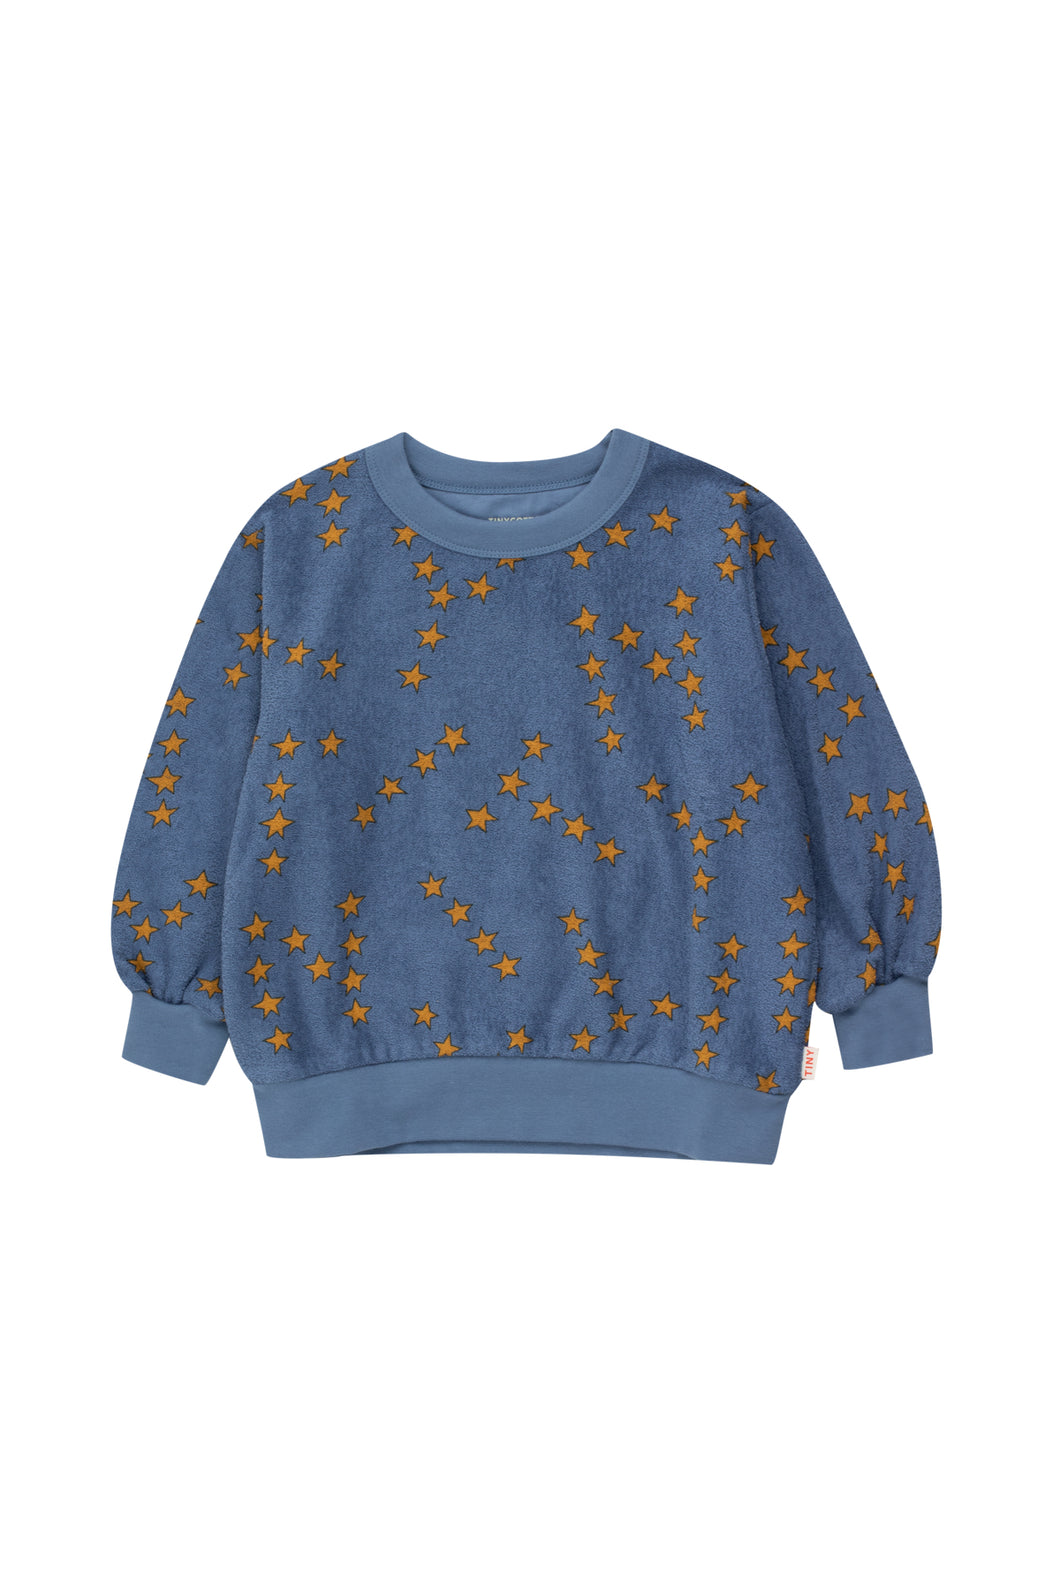 Tiny Stars Sweatshirt